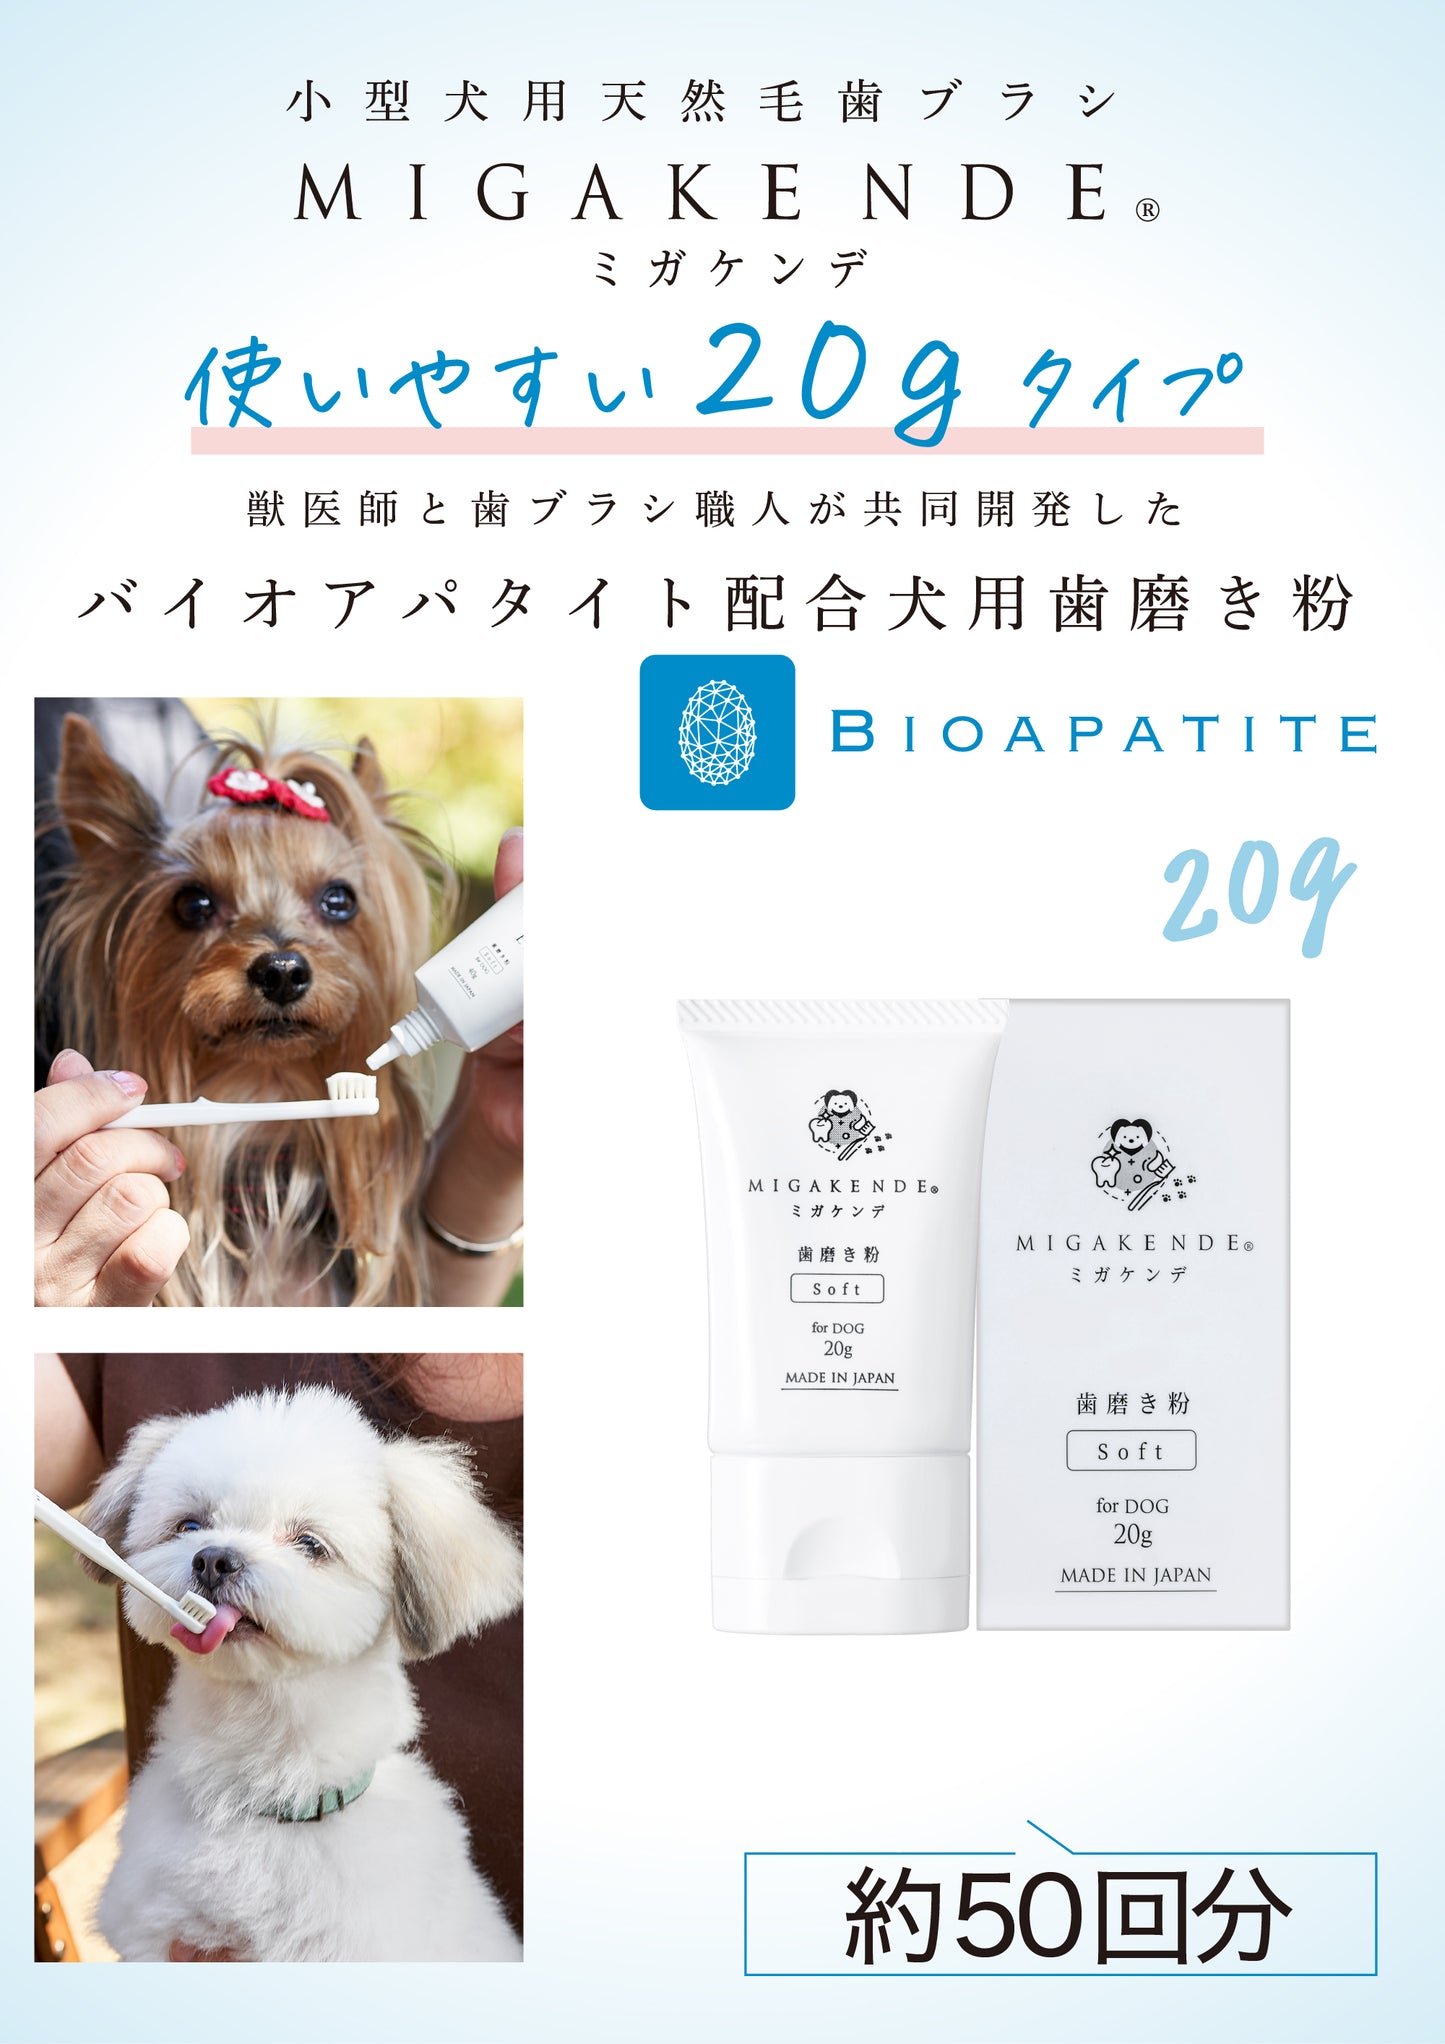 MIGAKENDE ミガケンデ 歯磨き粉 for DOG 20g